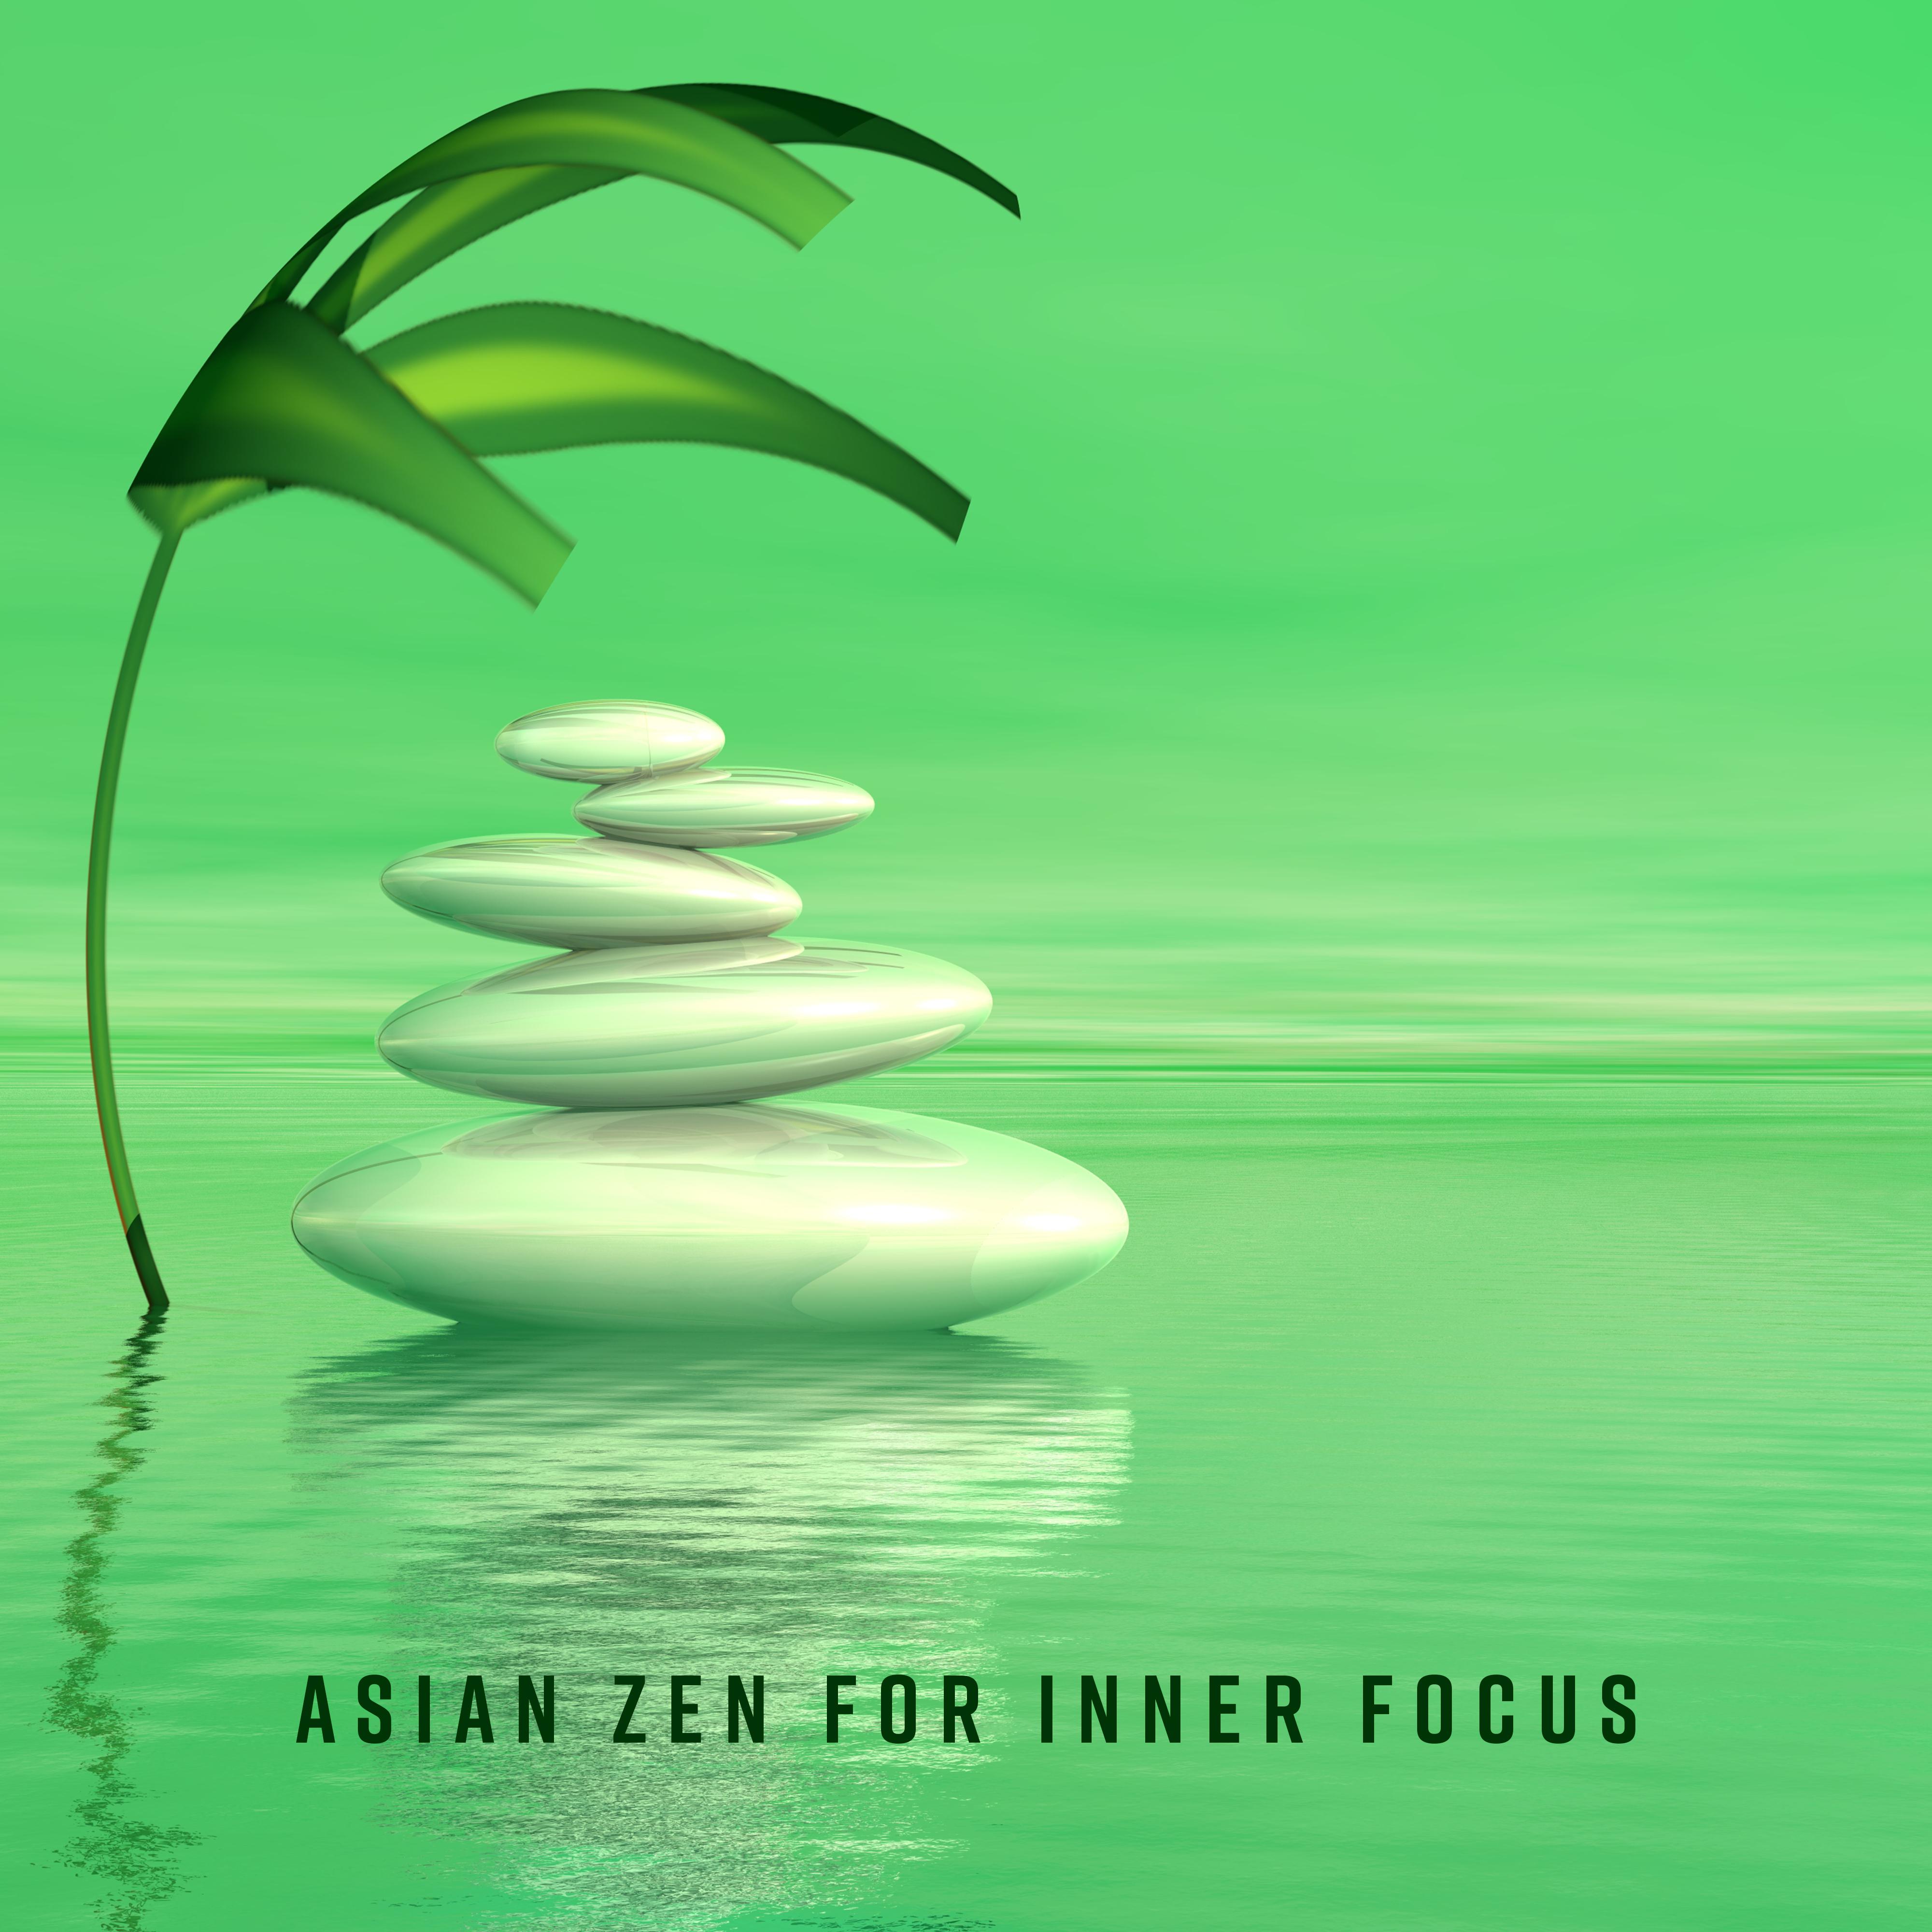 Asian Zen for Inner Focus – Meditation Music Zone, Reiki, Zen Lounge, Mindfulness Relaxation, Kundalini Awakening, Deep Harmony to Calm Down, Tranquil Peace